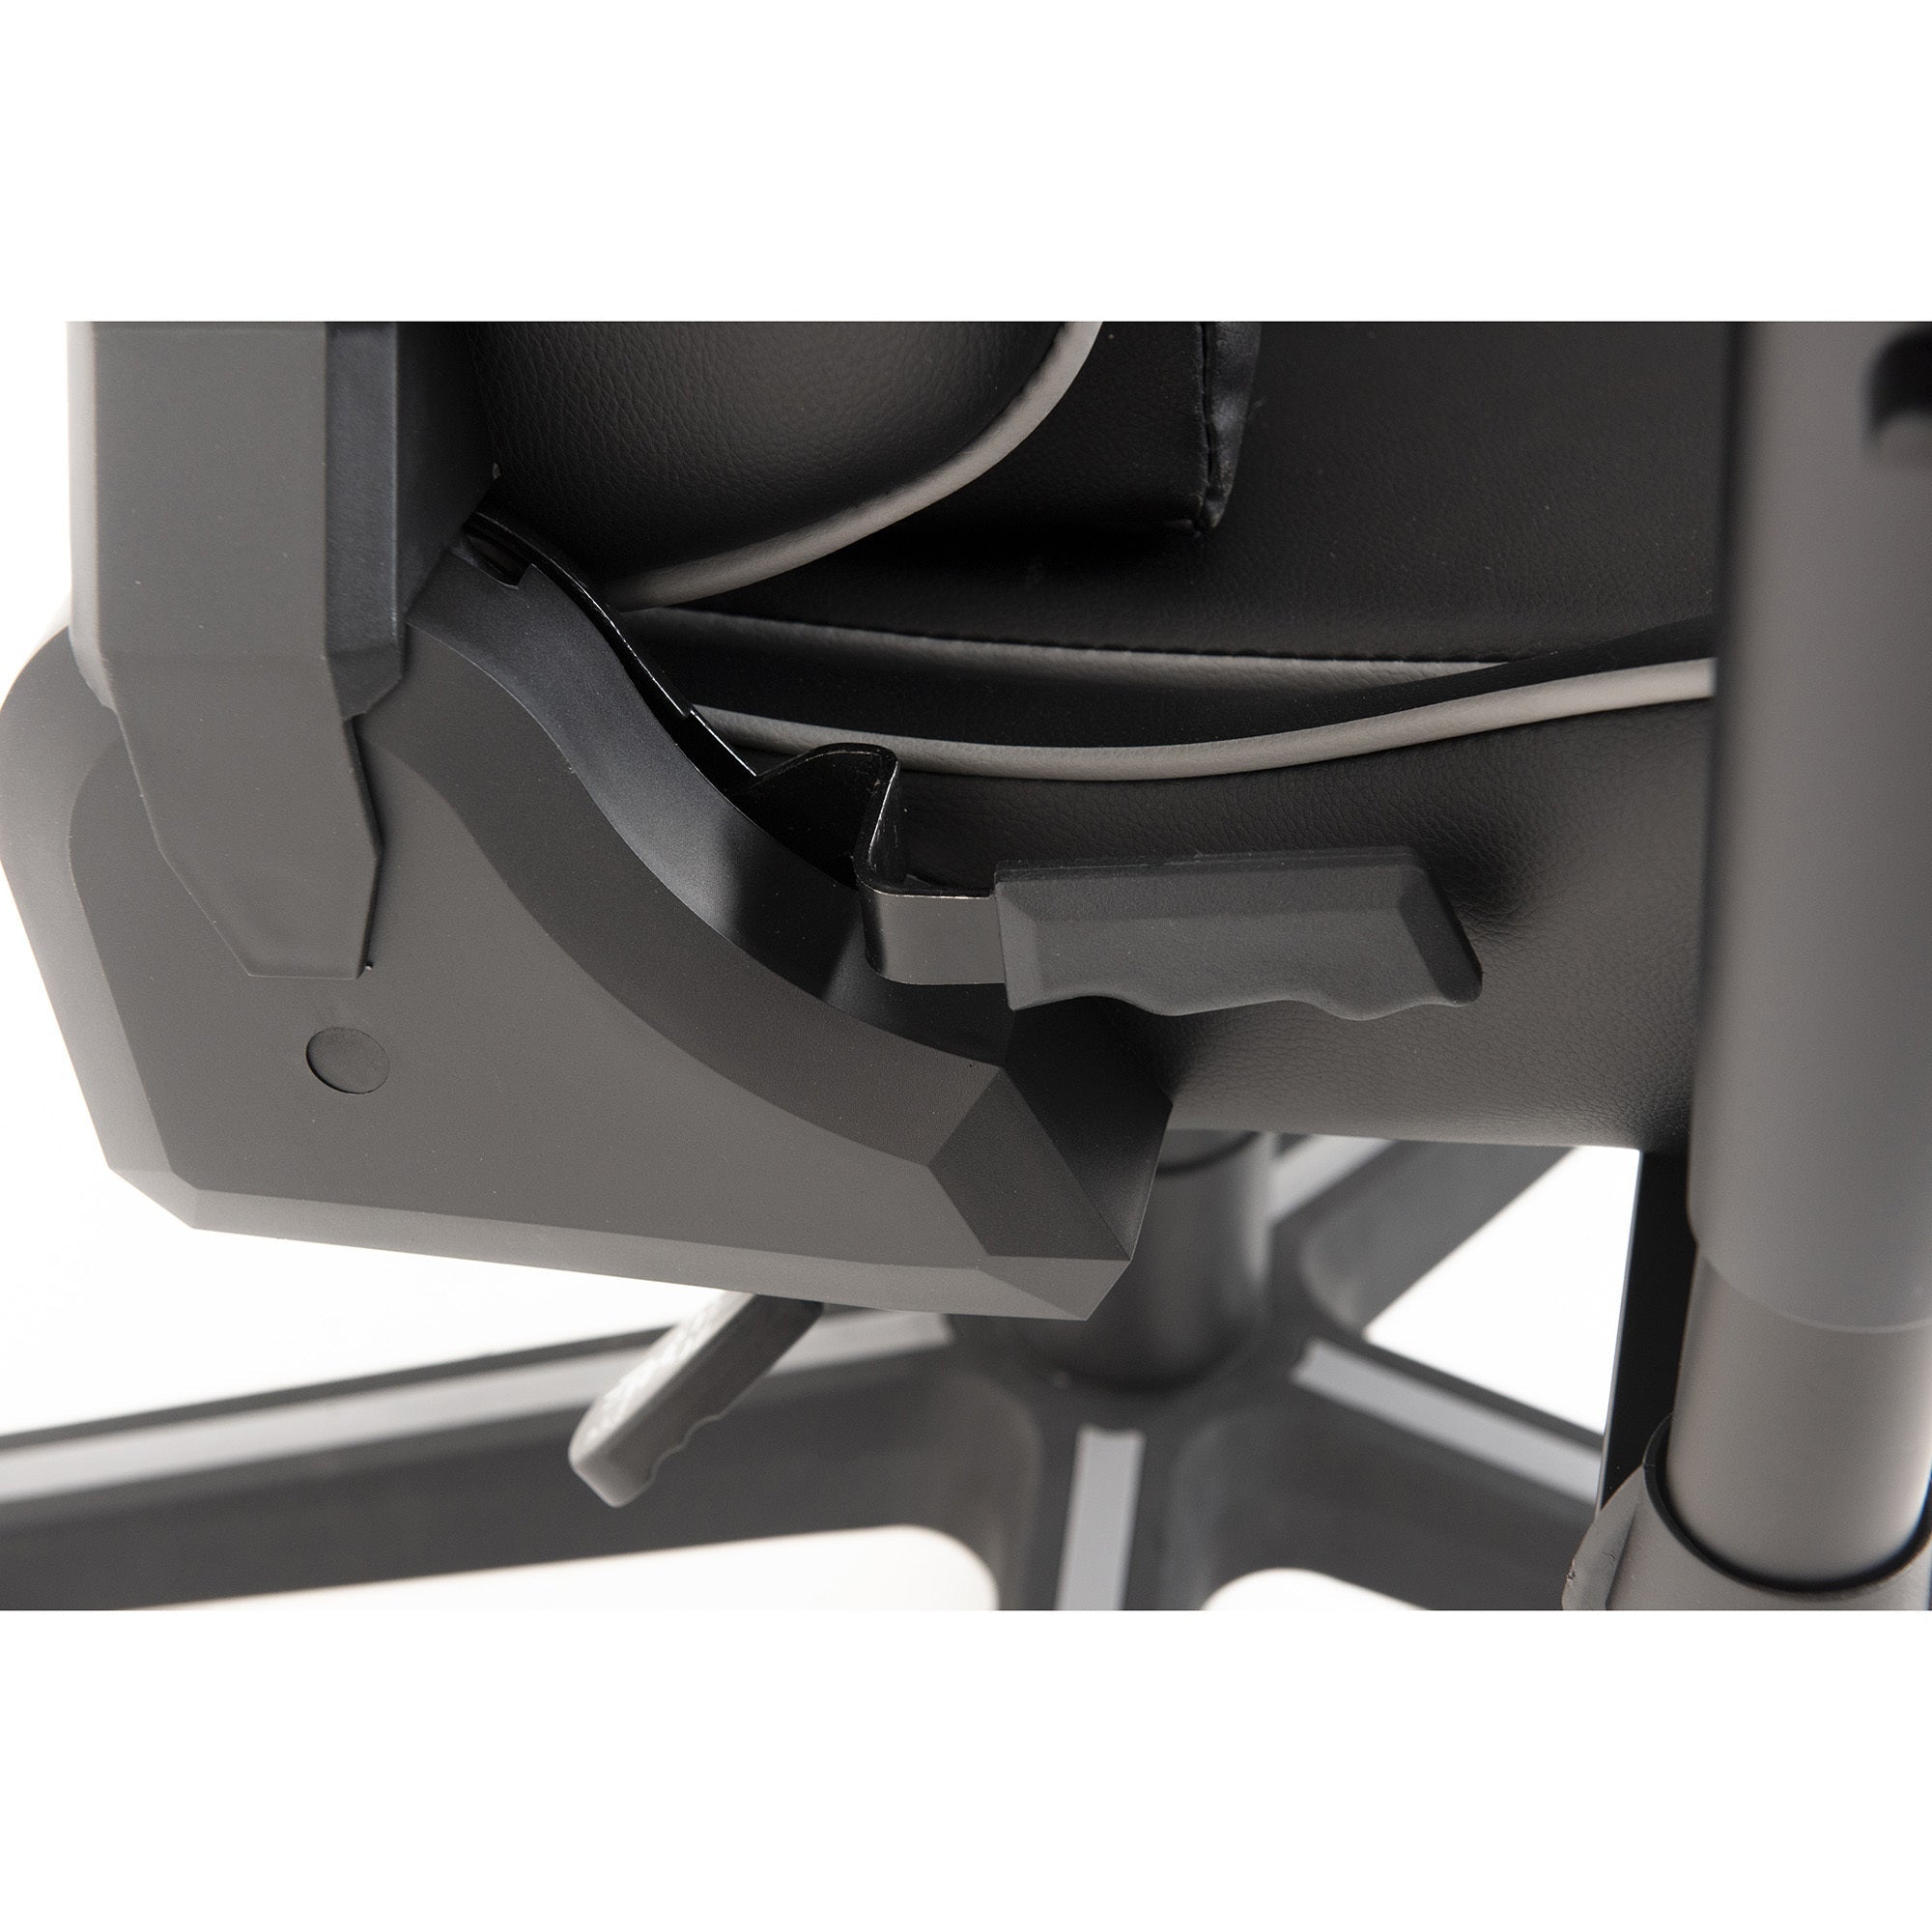 GalaXHero Class 4 Gas Gaming Chair In Grey Deals499